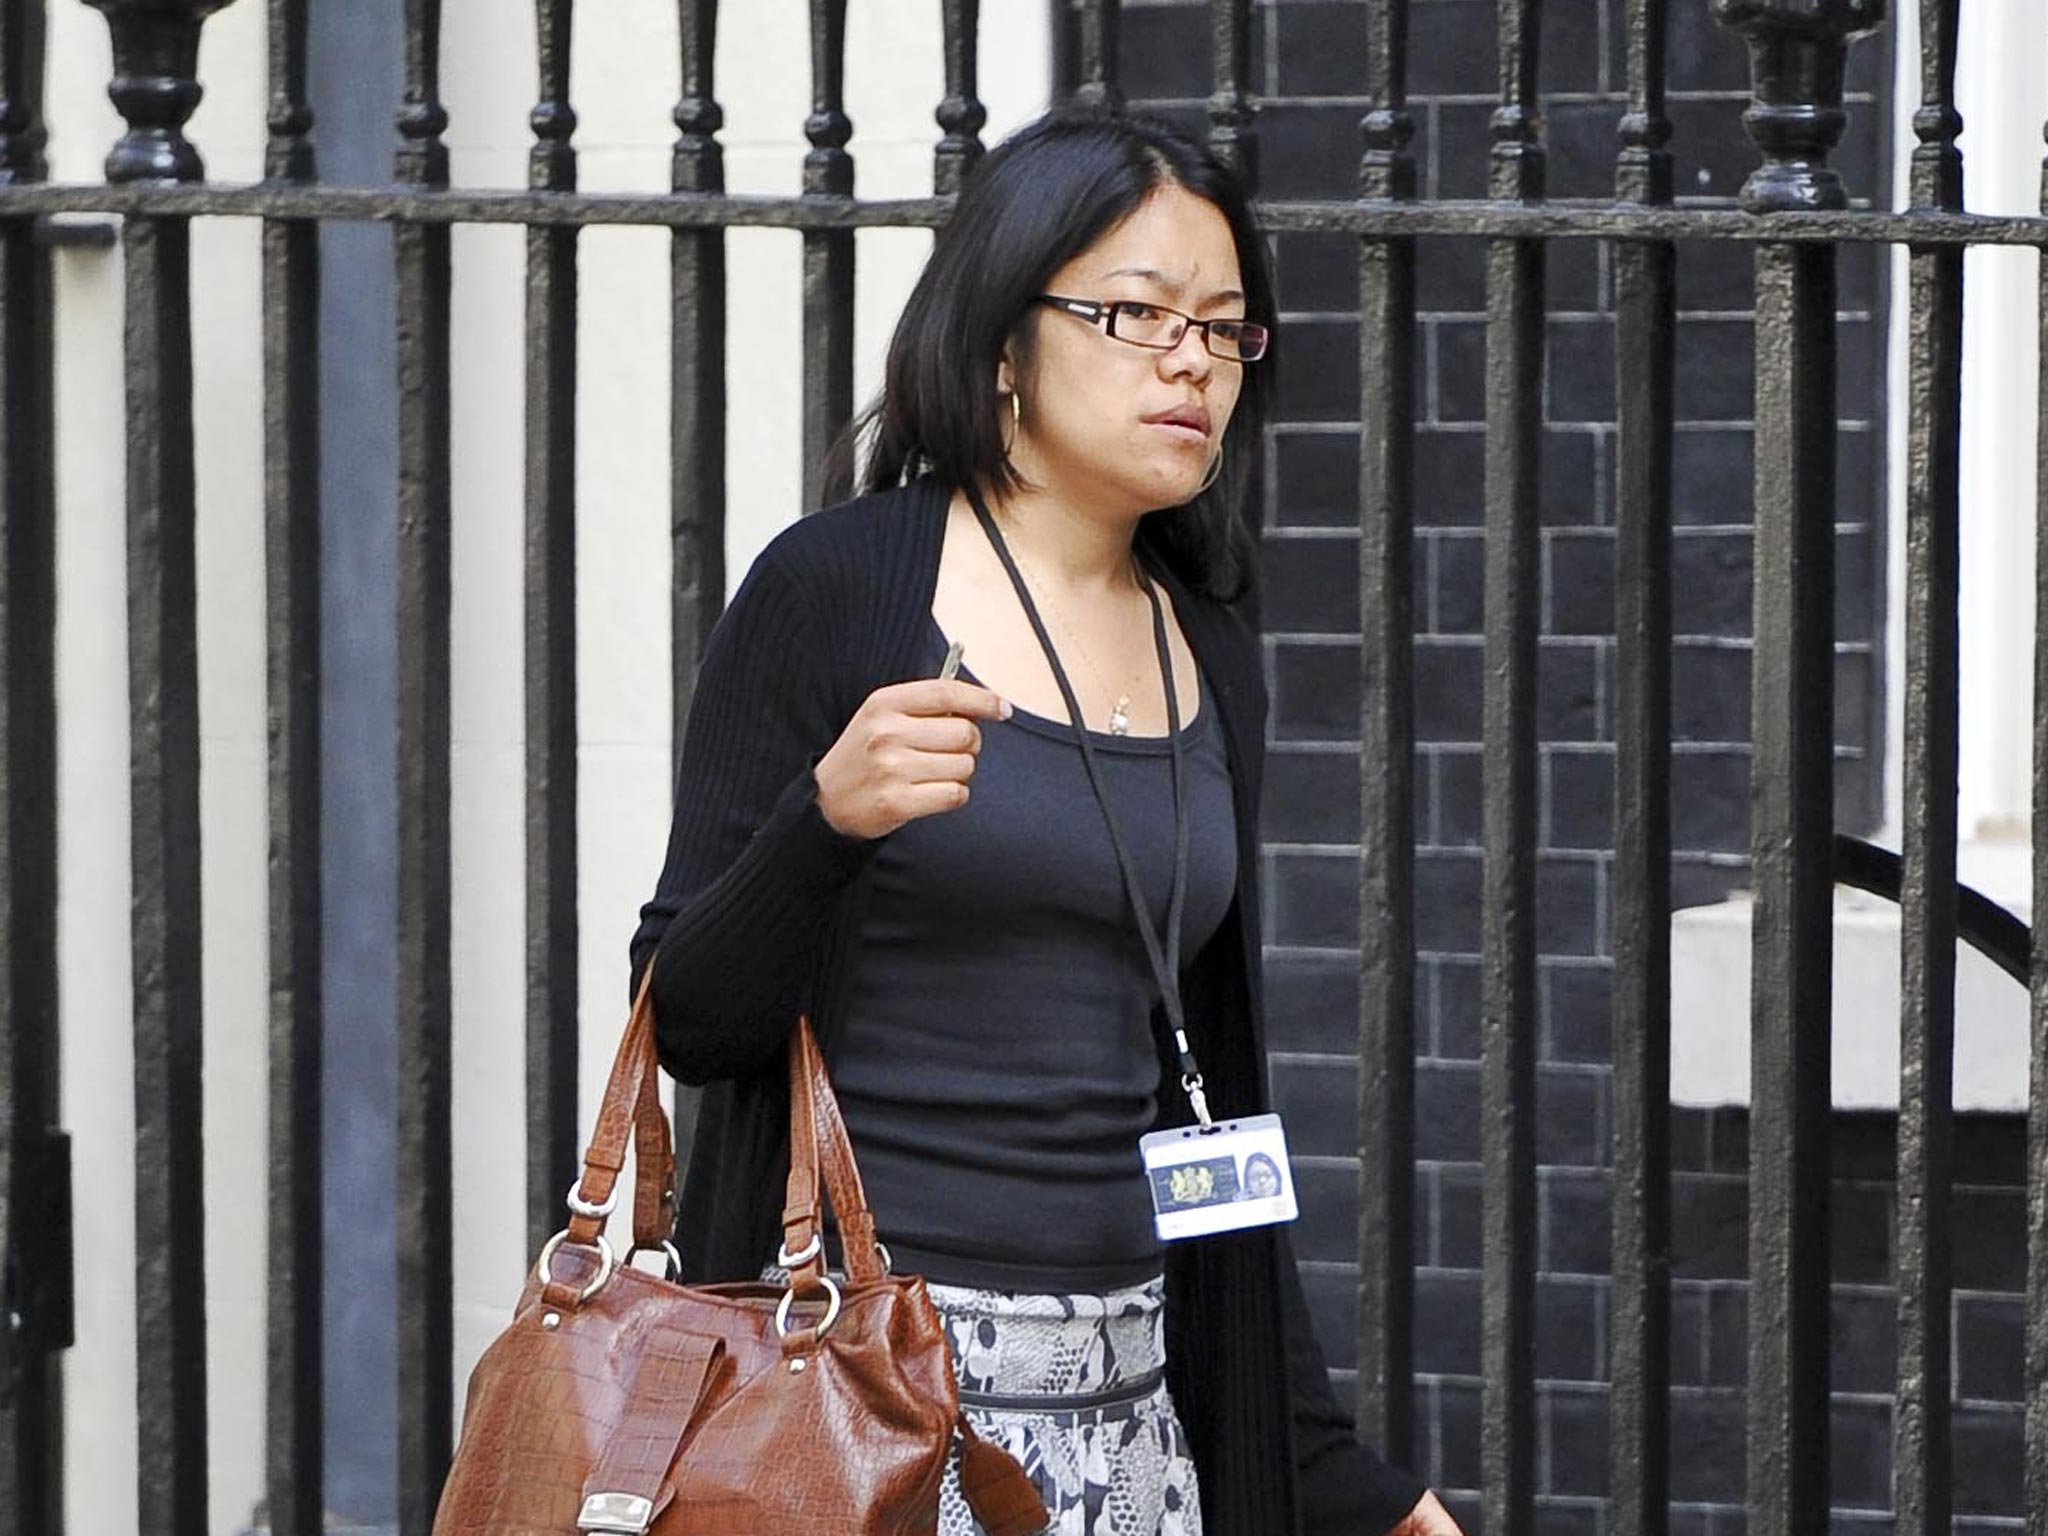 Gita Lama, a long-term nanny employed by Samantha Cameron, arrives for work at Downing Street